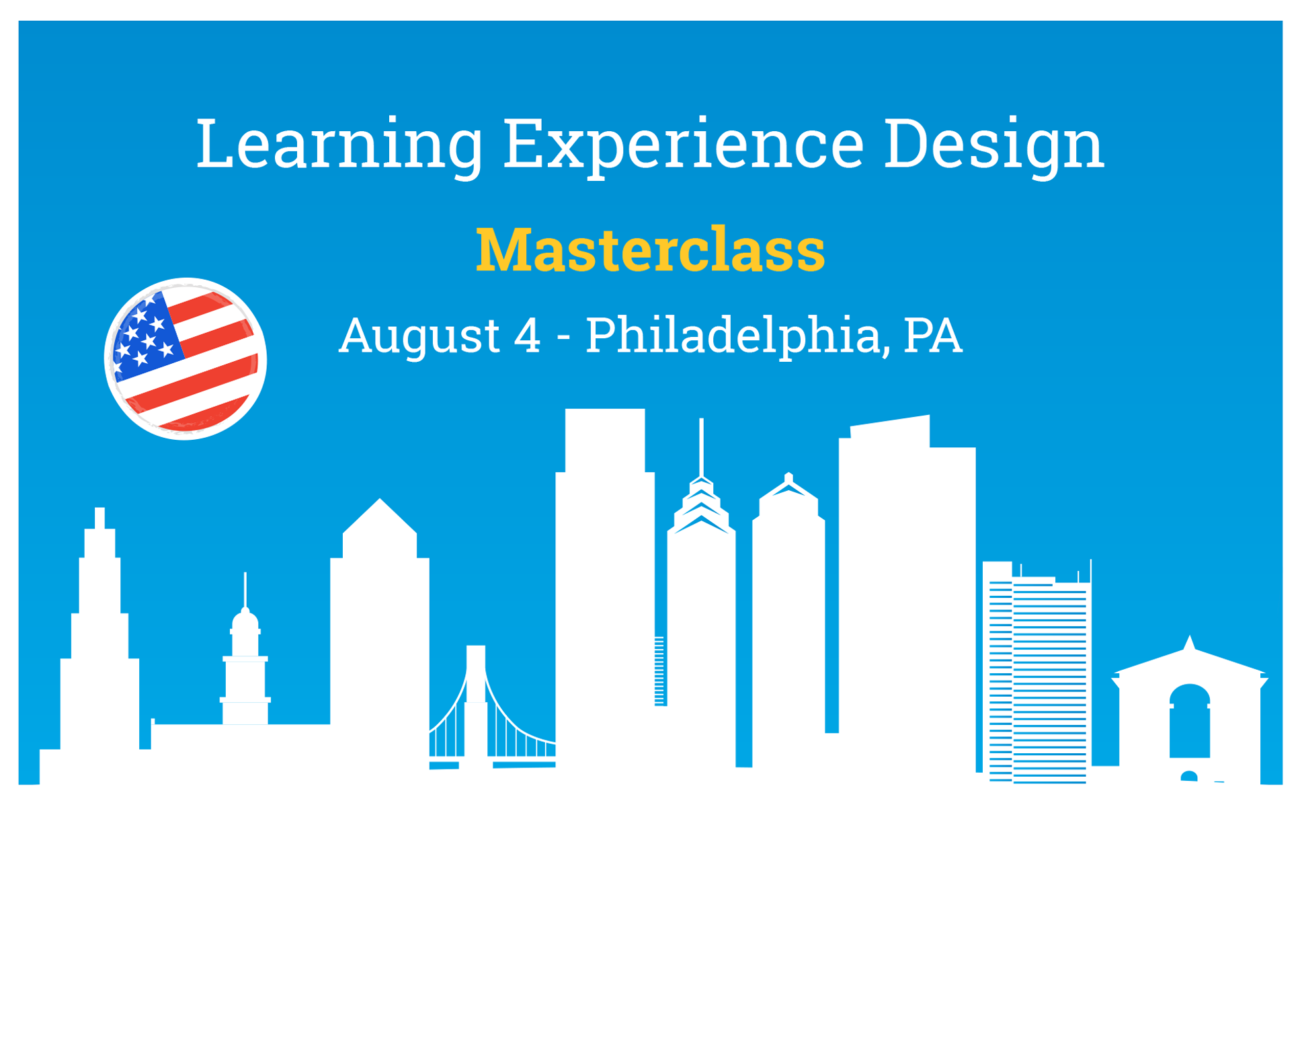 LXD masterclass August 4 Philadelphia banner